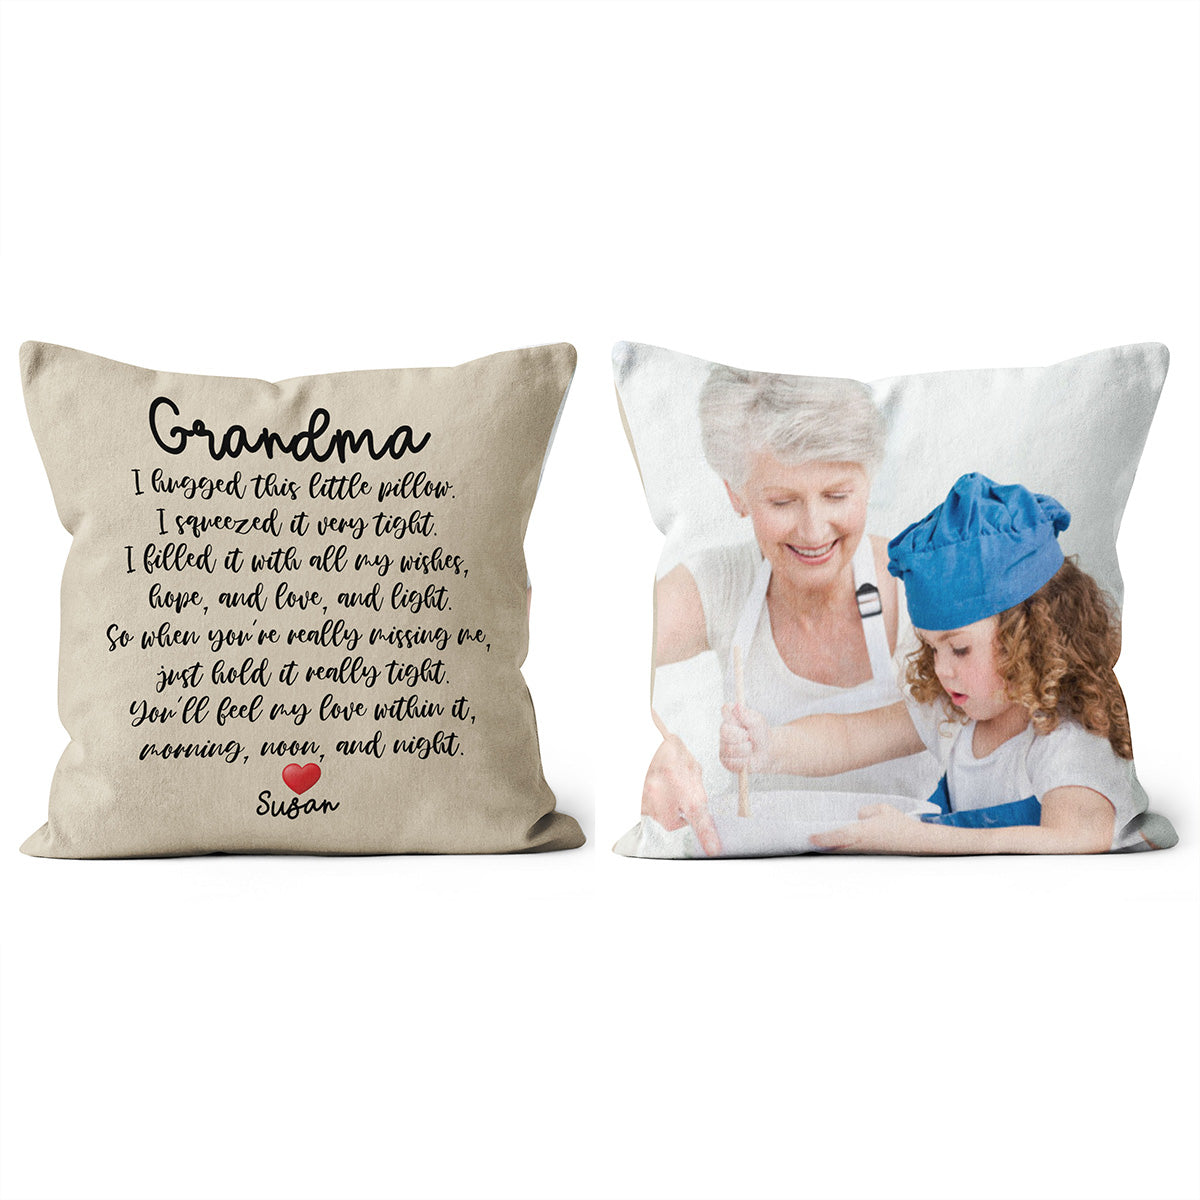 Family Names With & Pillow Grandchildren Names 